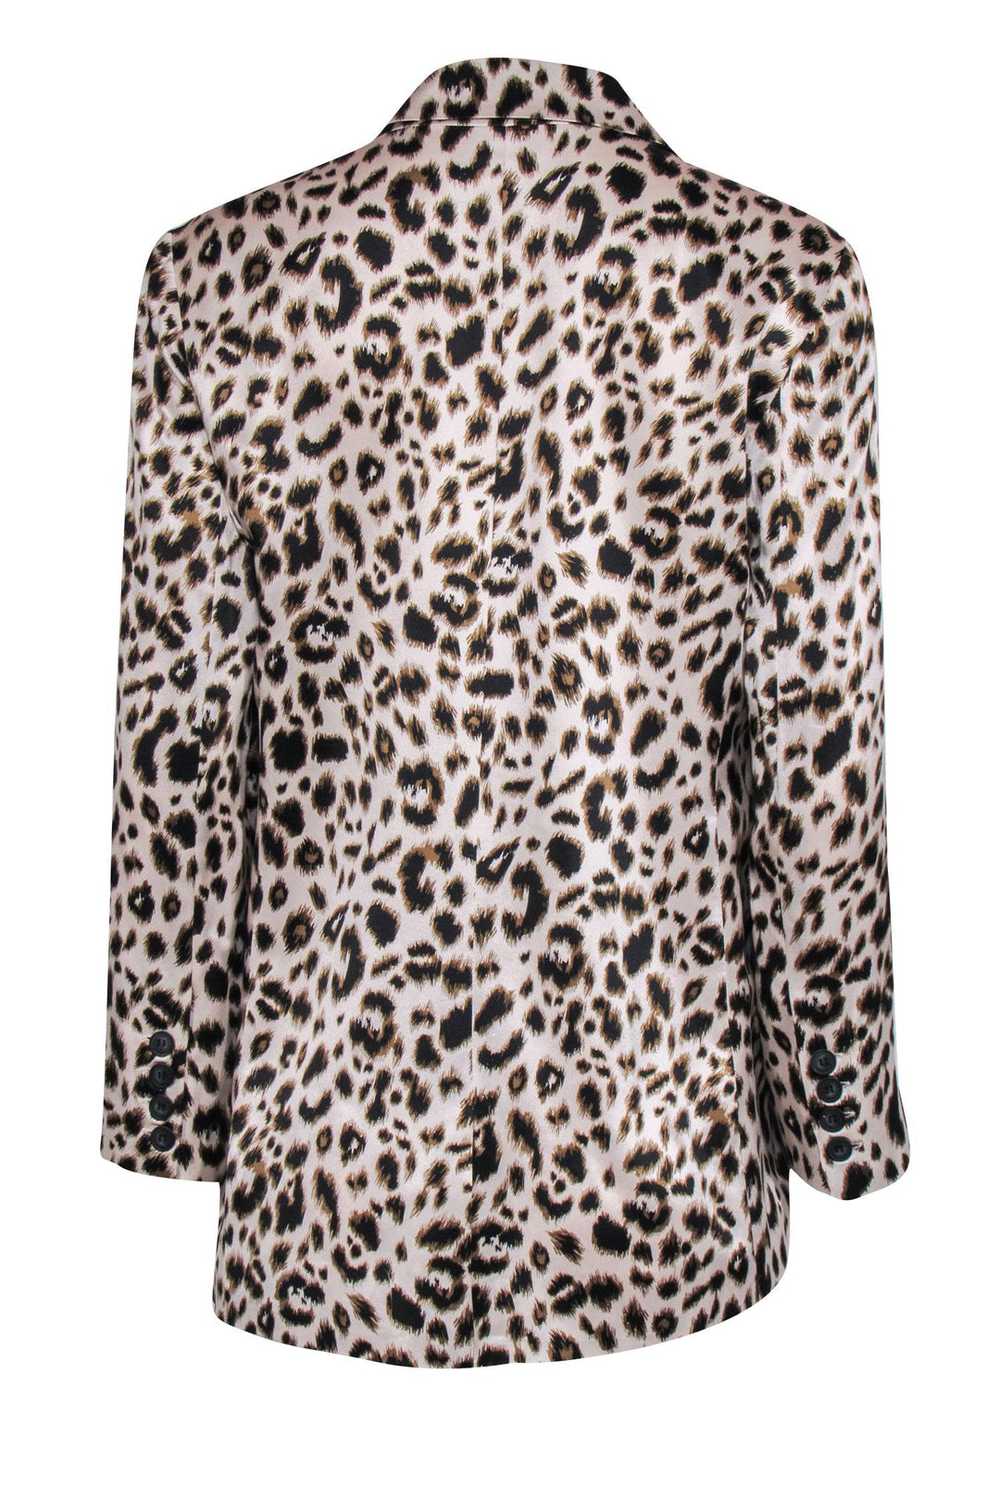 L'Agence - Cheetah Print Silk Double Breasted Bla… - image 3